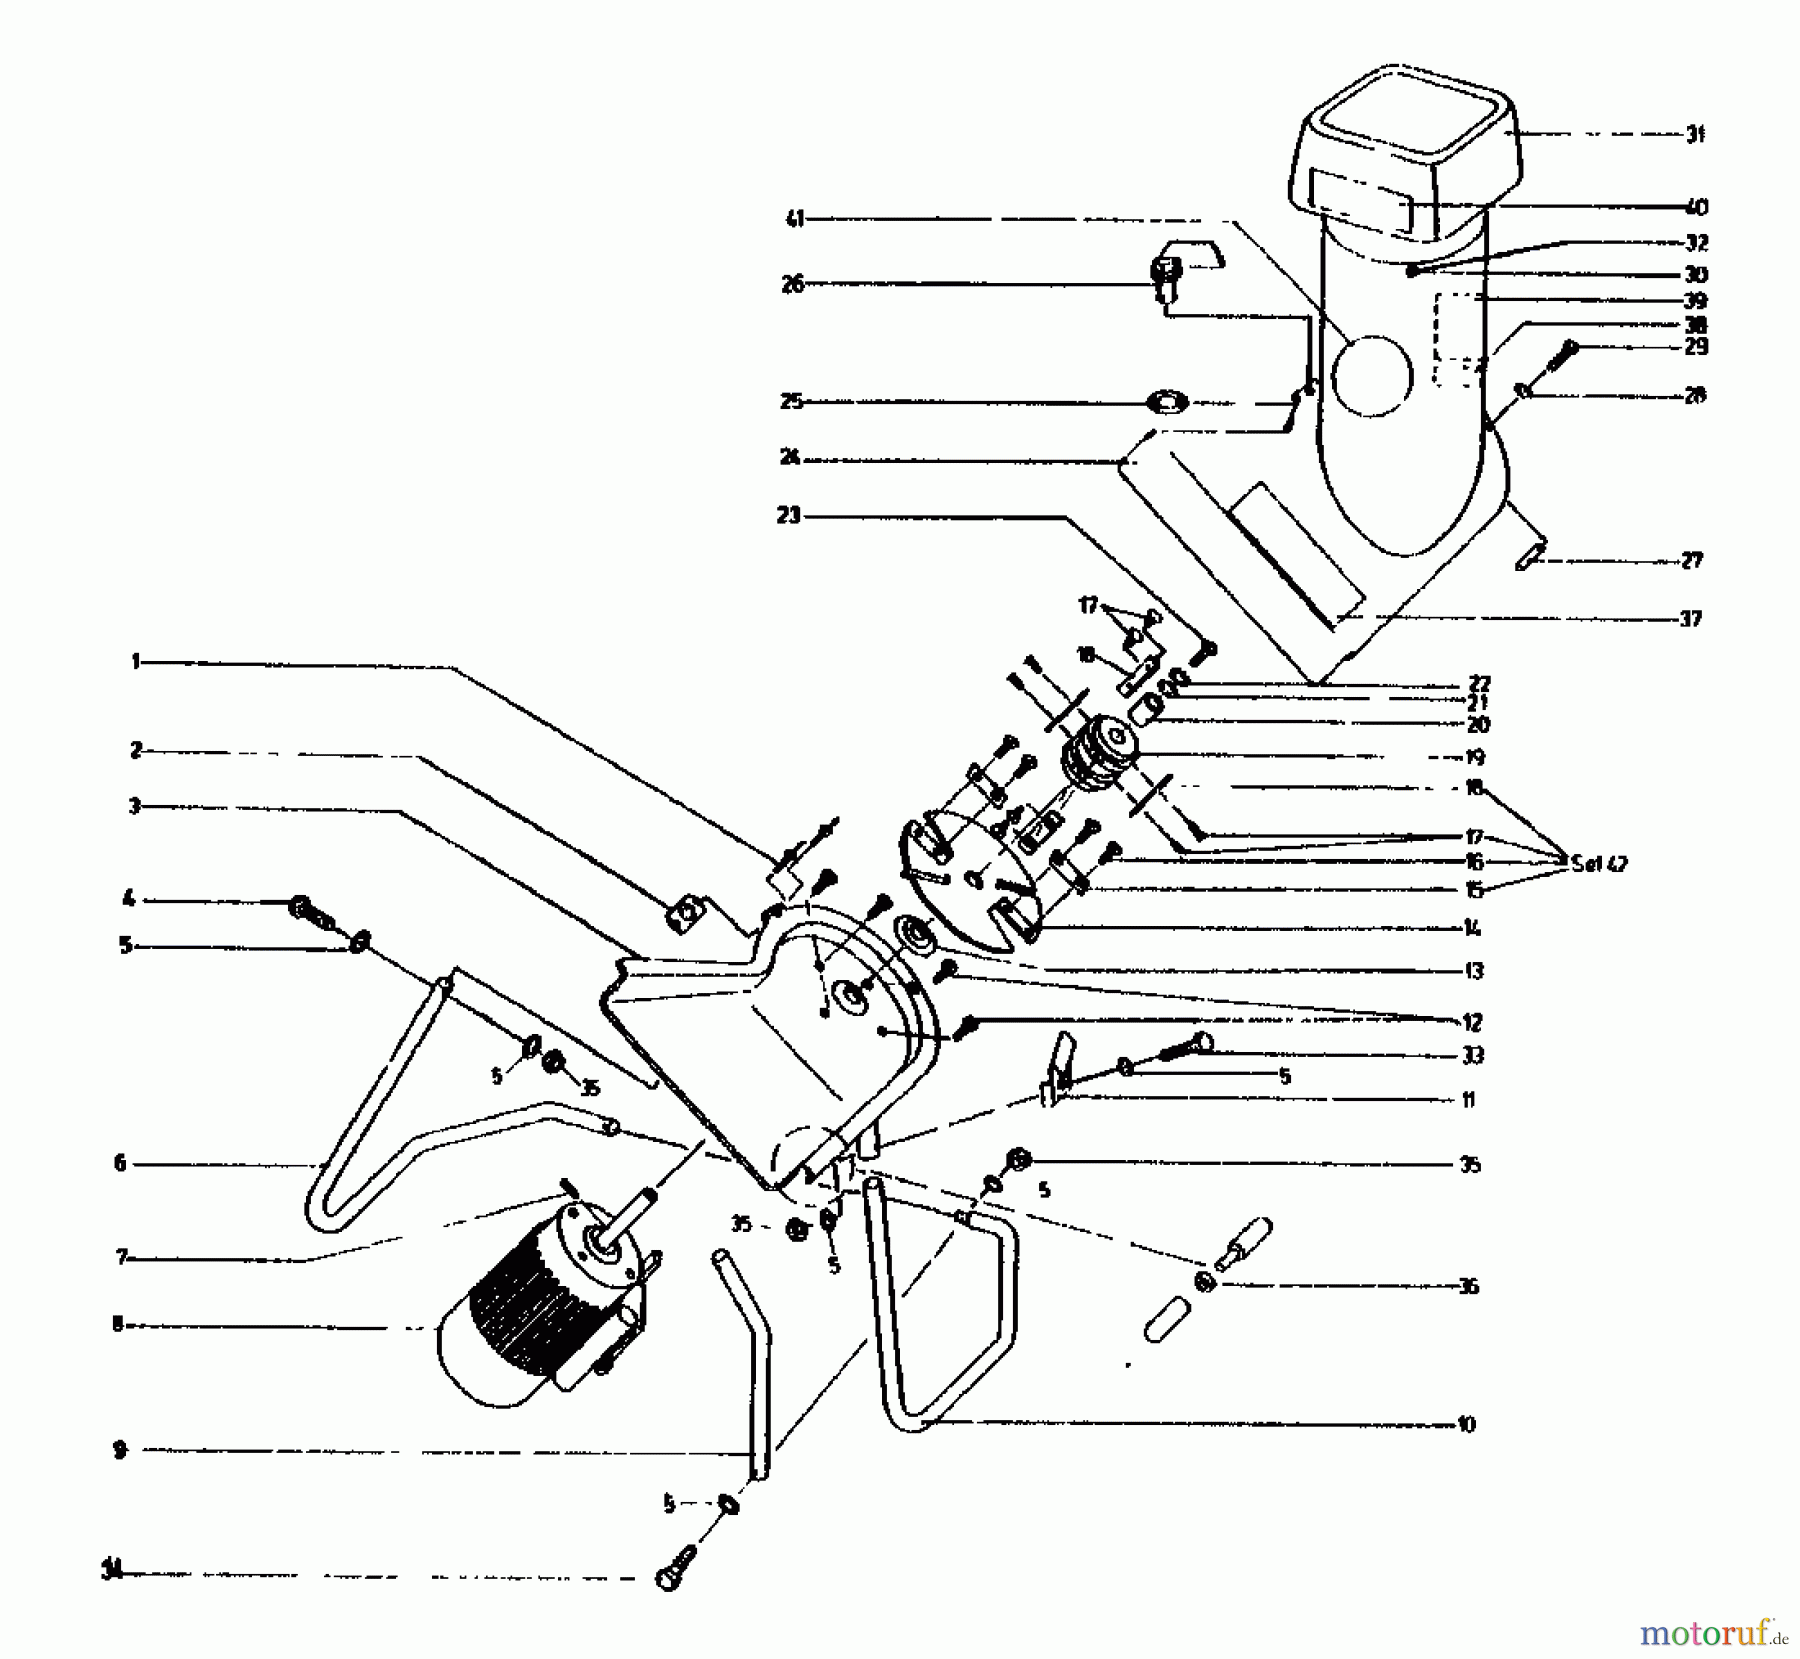  Gutbrod Chipper GAE 13 04002.03  (1991) Basic machine